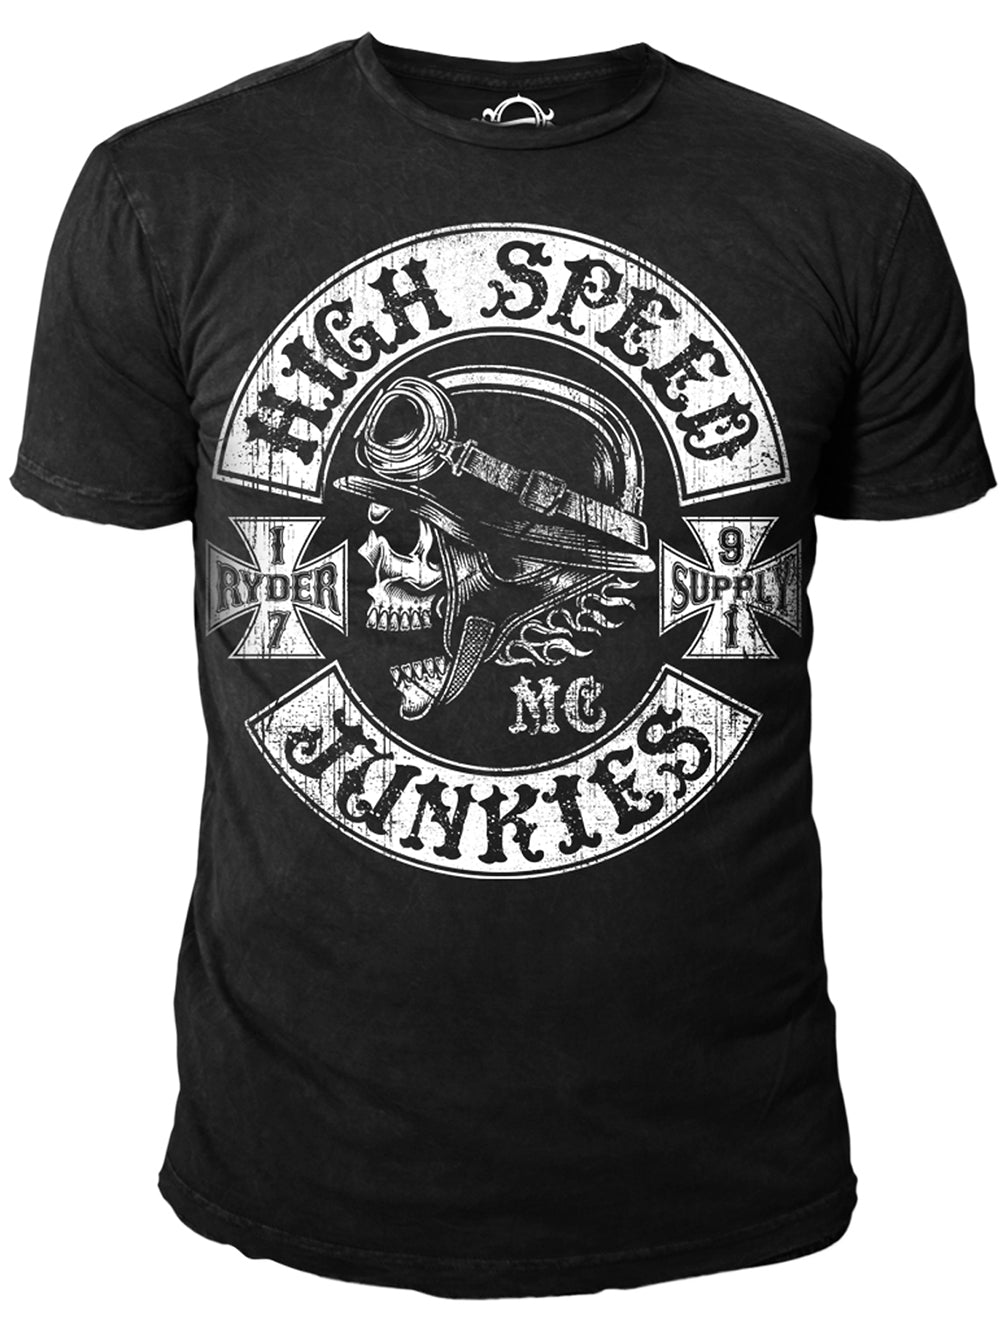 Ryder Supply Clothing - Junkies Mens T-shirt (Black)